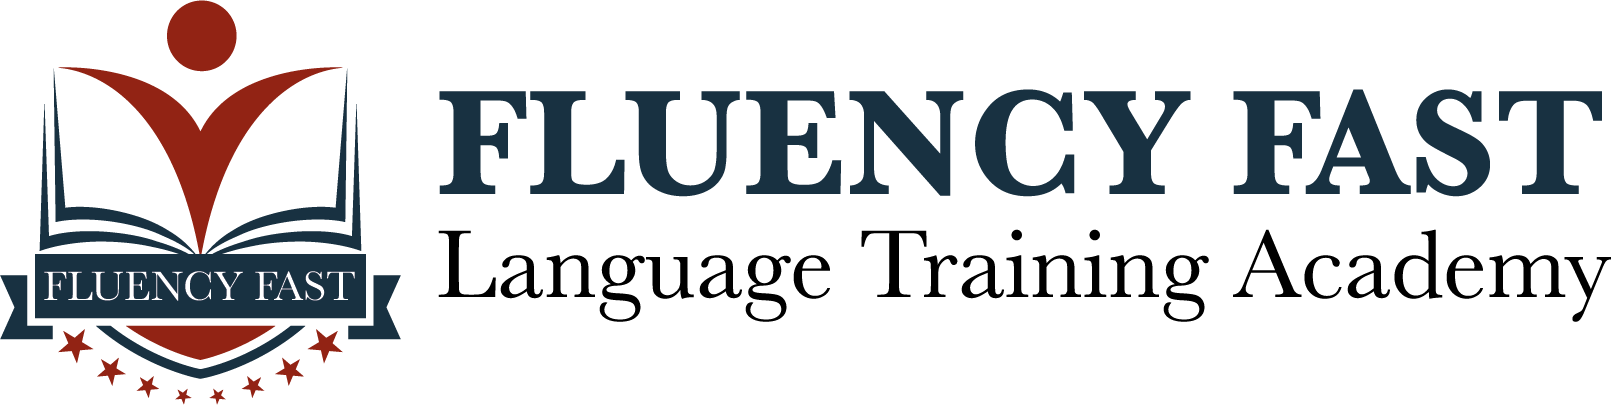 Fluency Fast Language Training Academy Logo